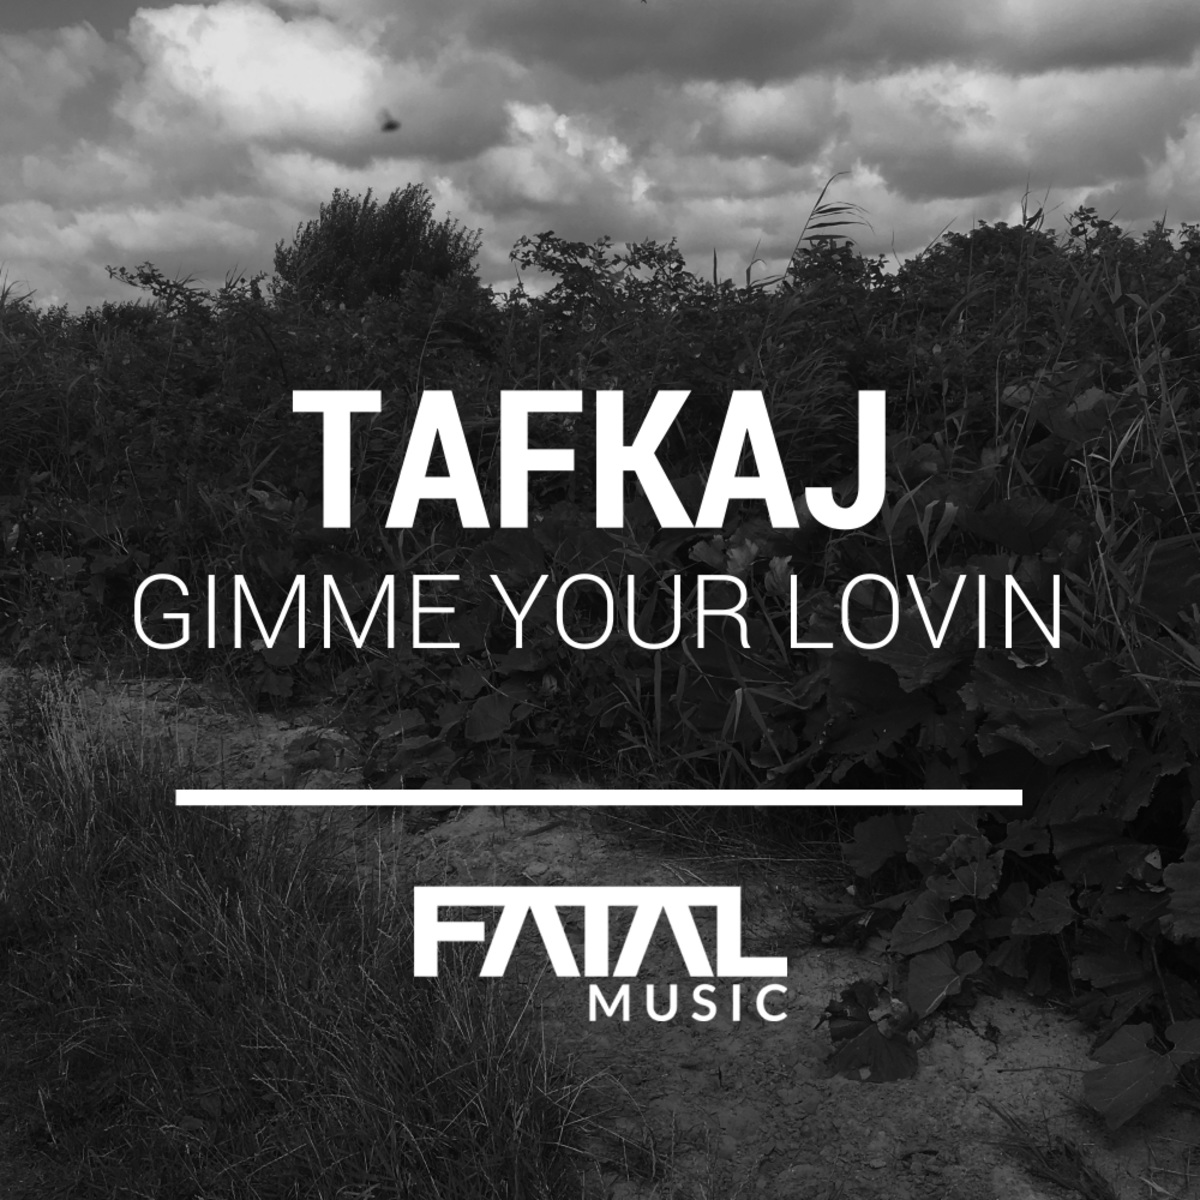 Tafkaj - Gimme Your Lovin / Fatal Music